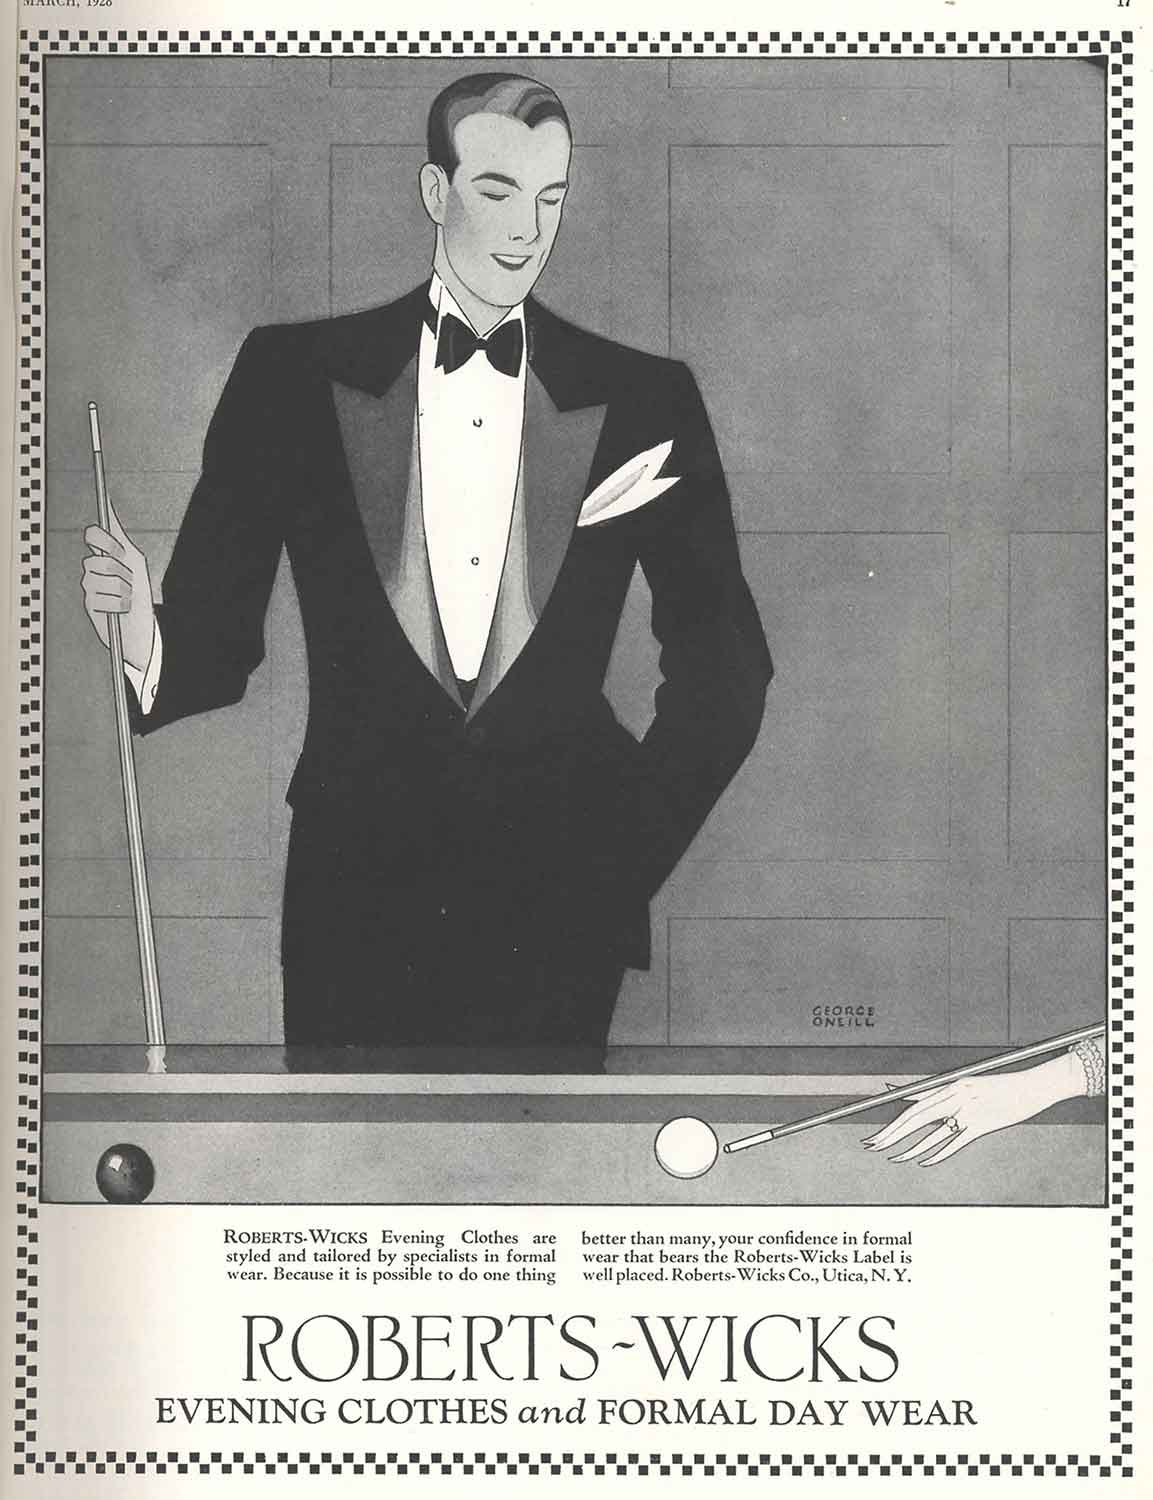 A Roaring 20s ad for Roberts-Wicks formalwear